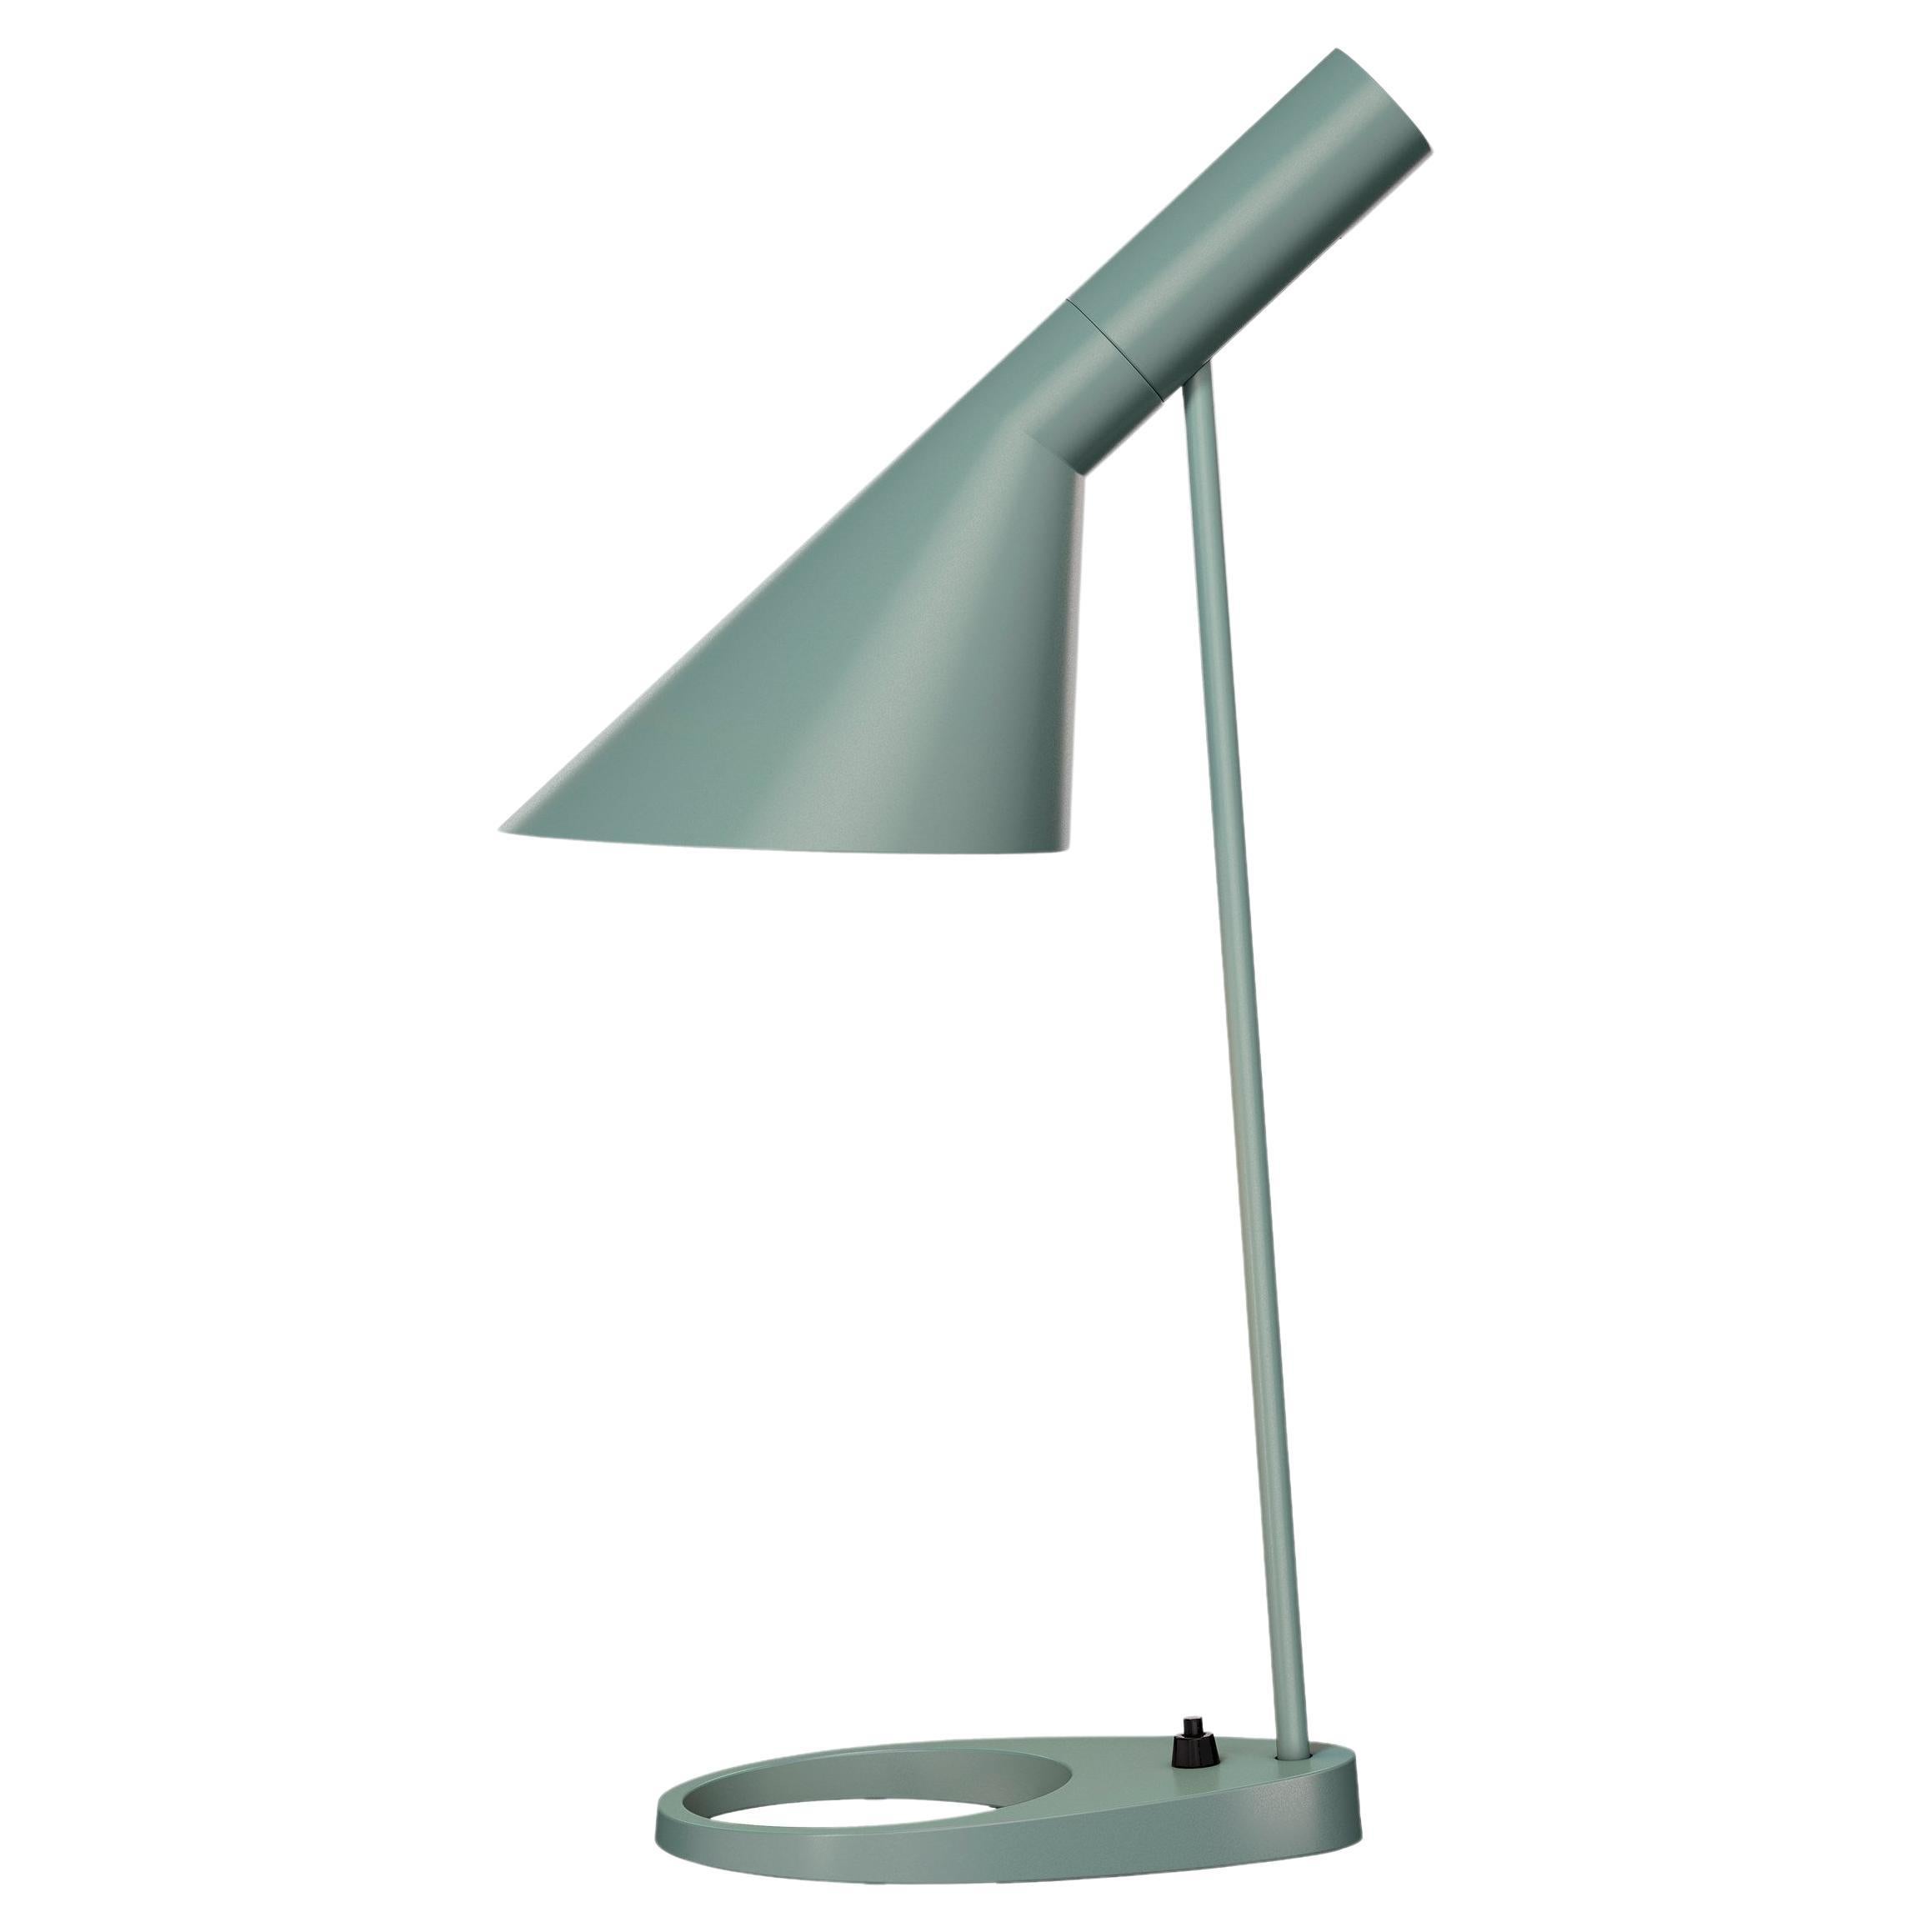 Arne Jacobsen AJ Table Lamp in Pale Petroleum for Louis Poulsen For Sale